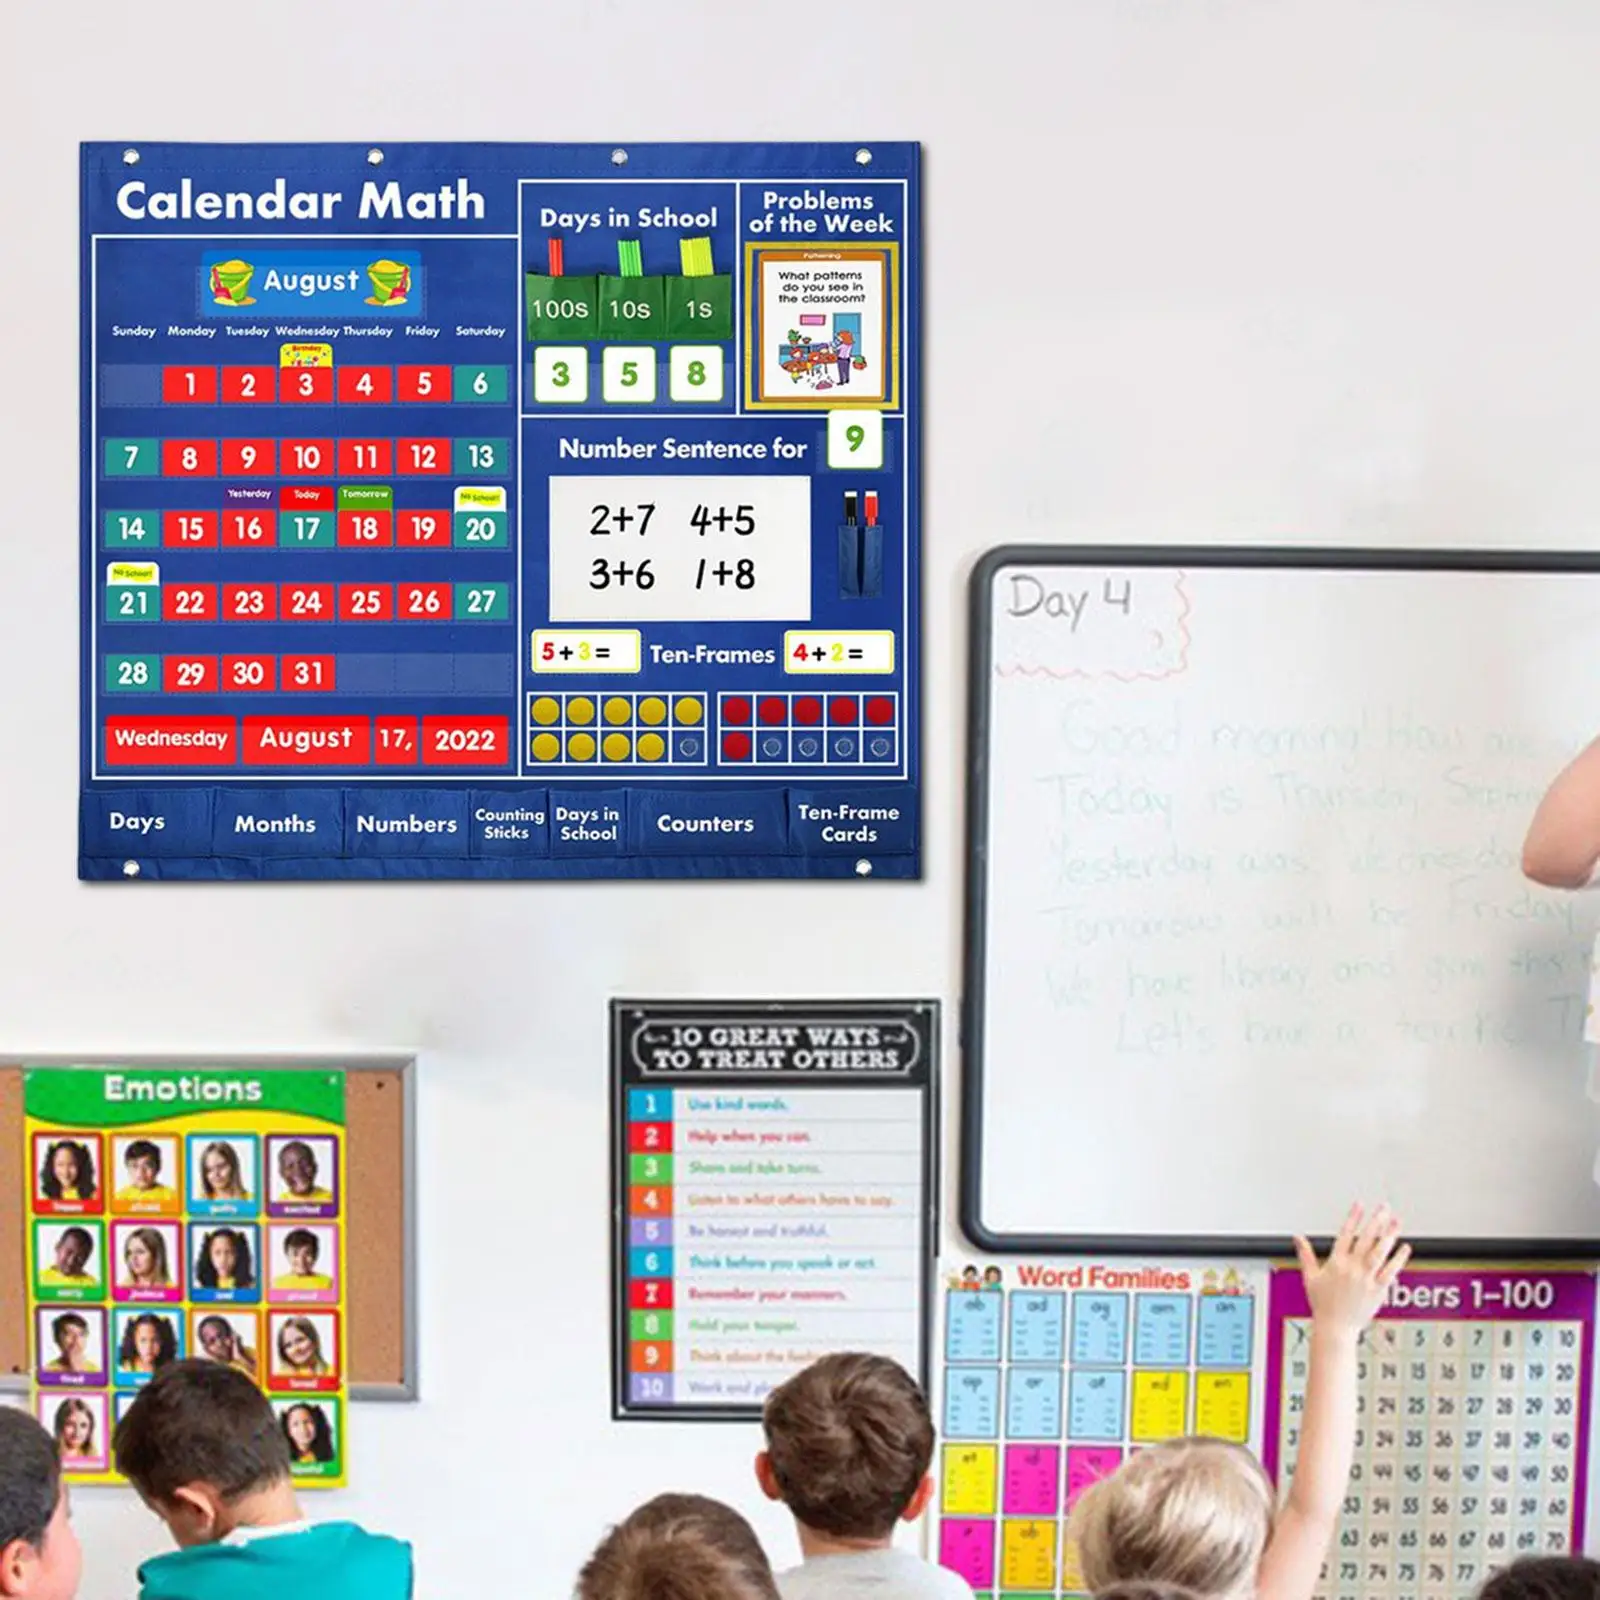 Daily Math Calendar Classroom Pocket Chart 249 Learning Cards Teaching Materials for Elementary Daily Math Activities Preschool